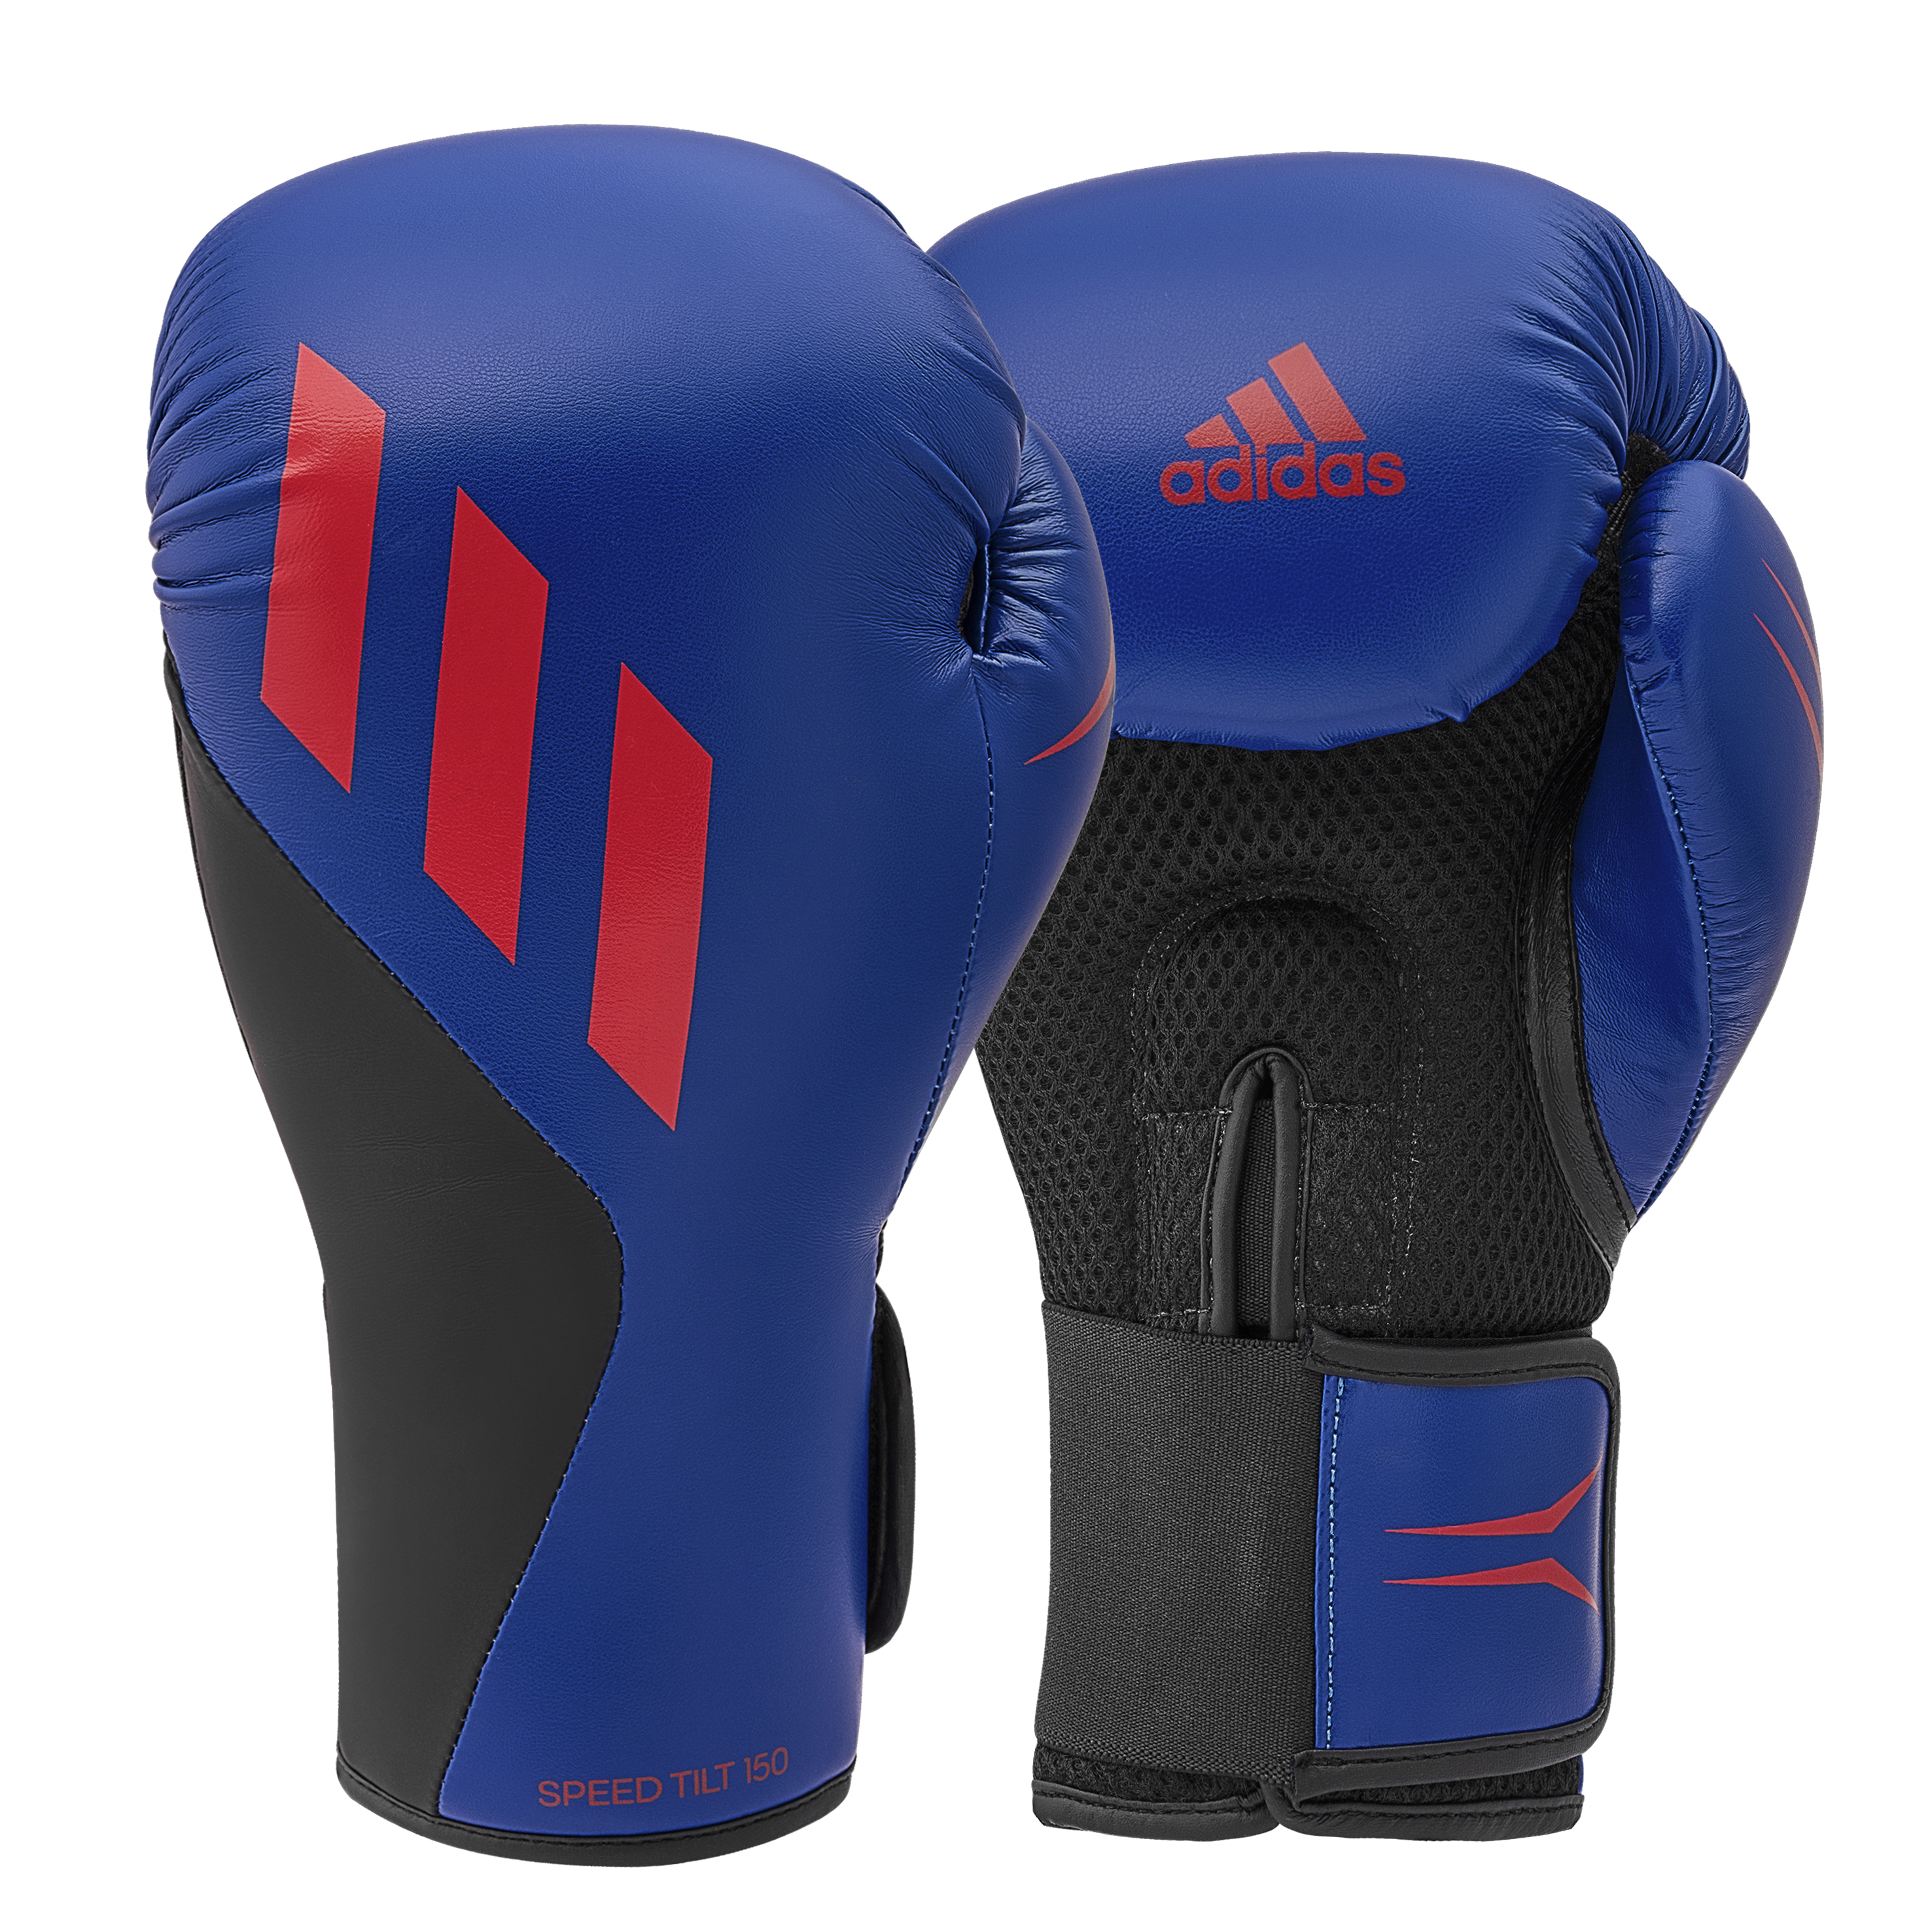 Speed Tilt 150 Training Glove 【R.Blue/Mat Black/S.Red】